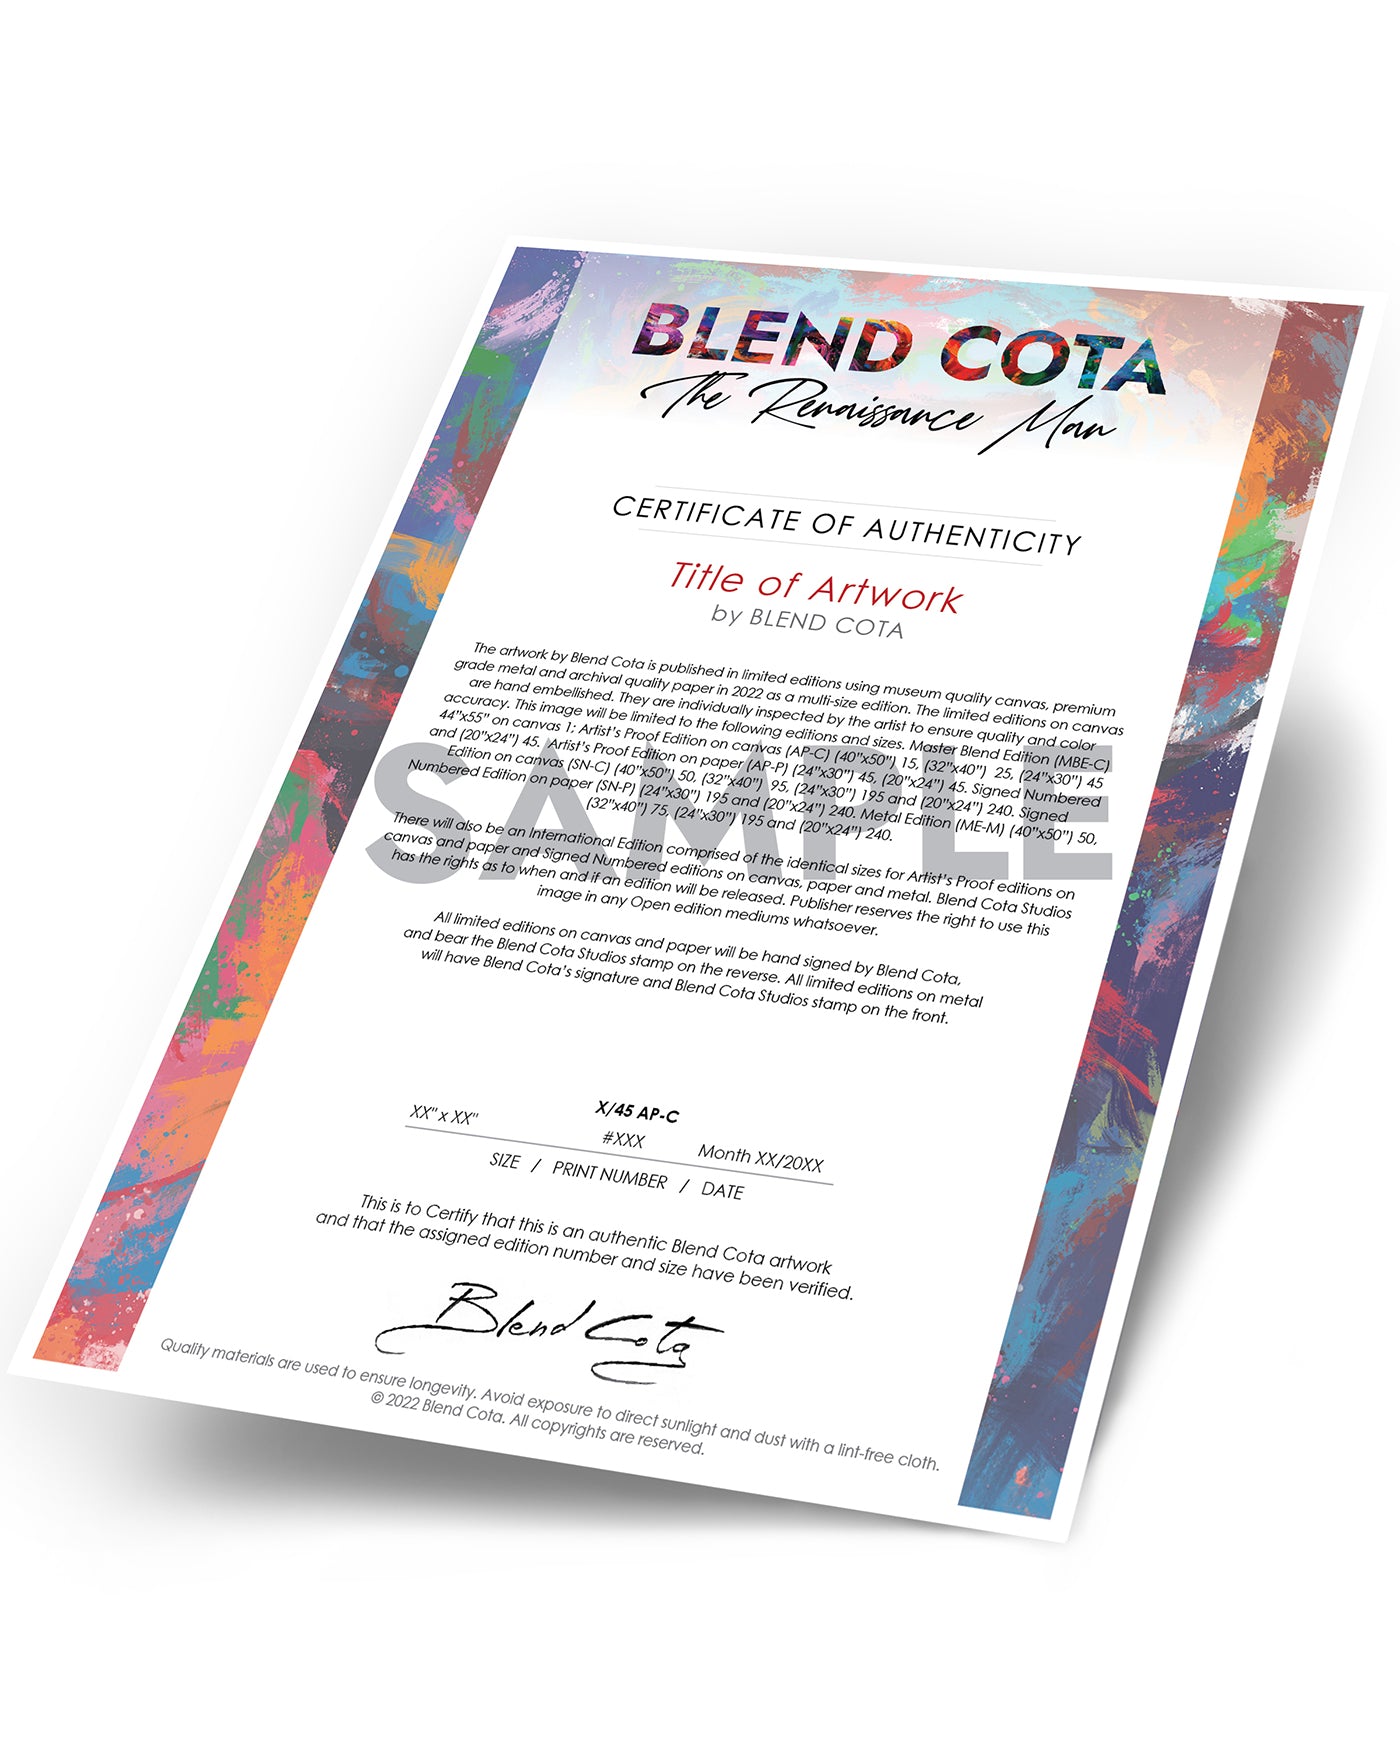 
                  
                    The Mystical Raven - Blend Cota Limited Edition Art on Canvas - Blend Cota Studios - certificate of authenticity
                  
                